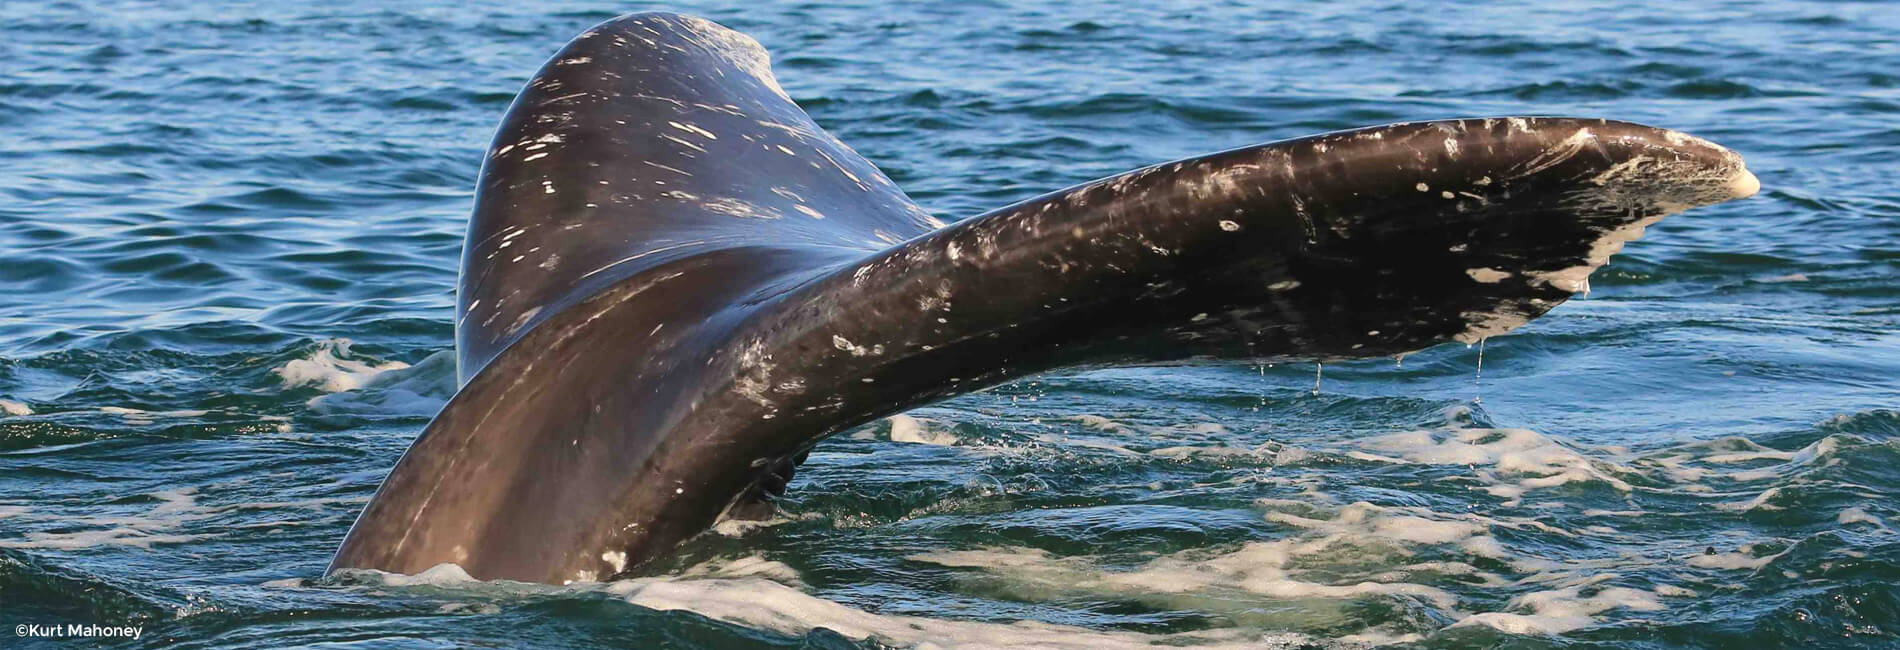 whale tail header